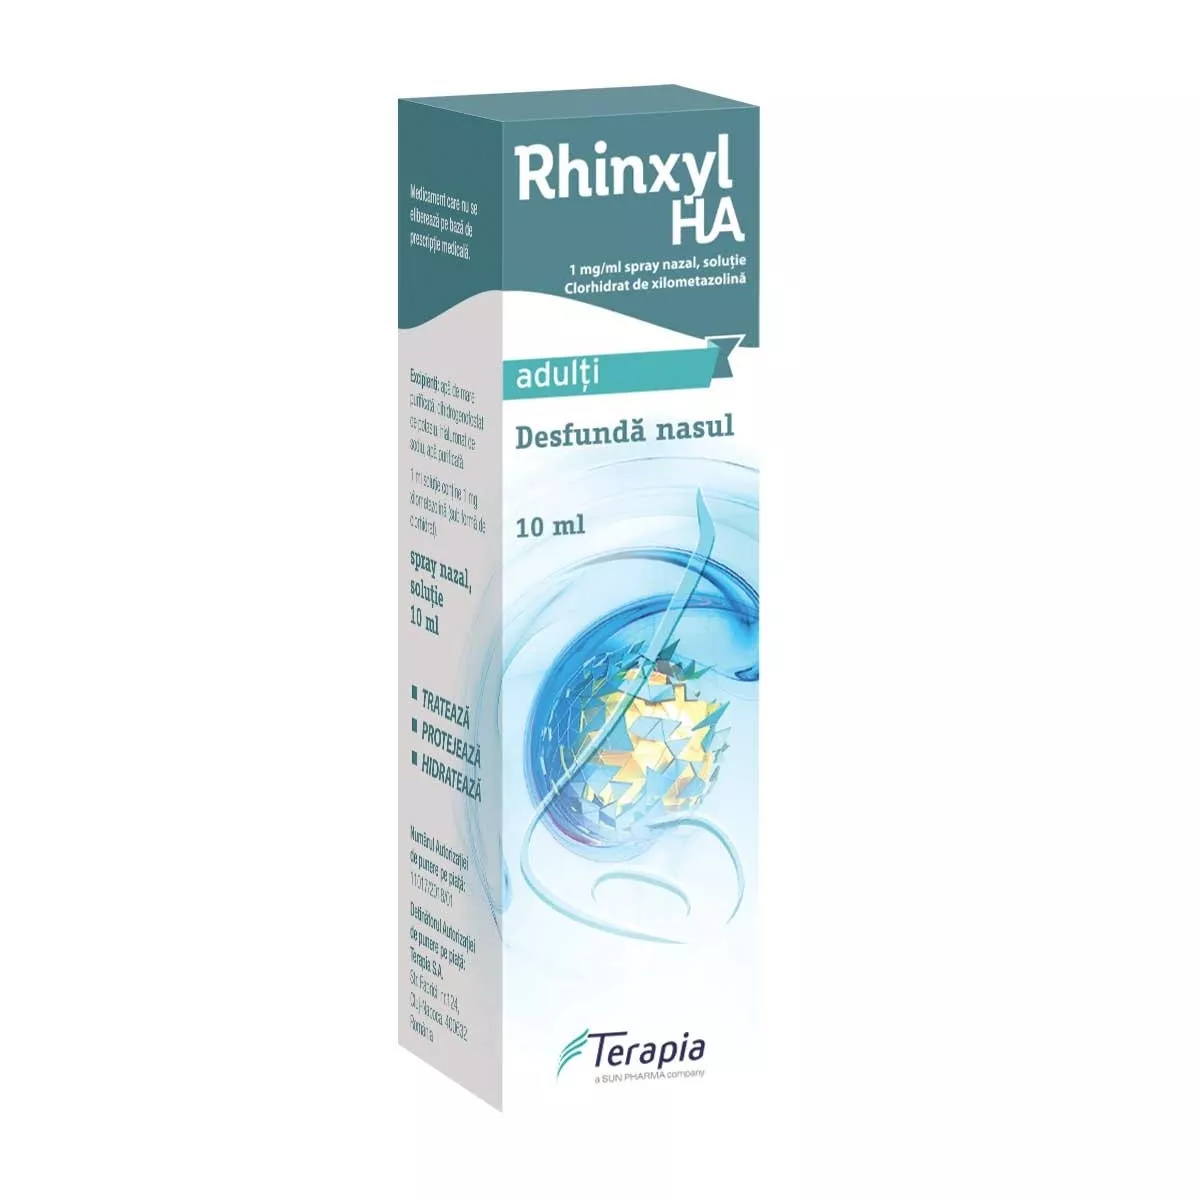 Rhinxyl Ha spray nazal solutie, 1 mg/ml, 10 ml, Terapia, [],nordpharm.ro